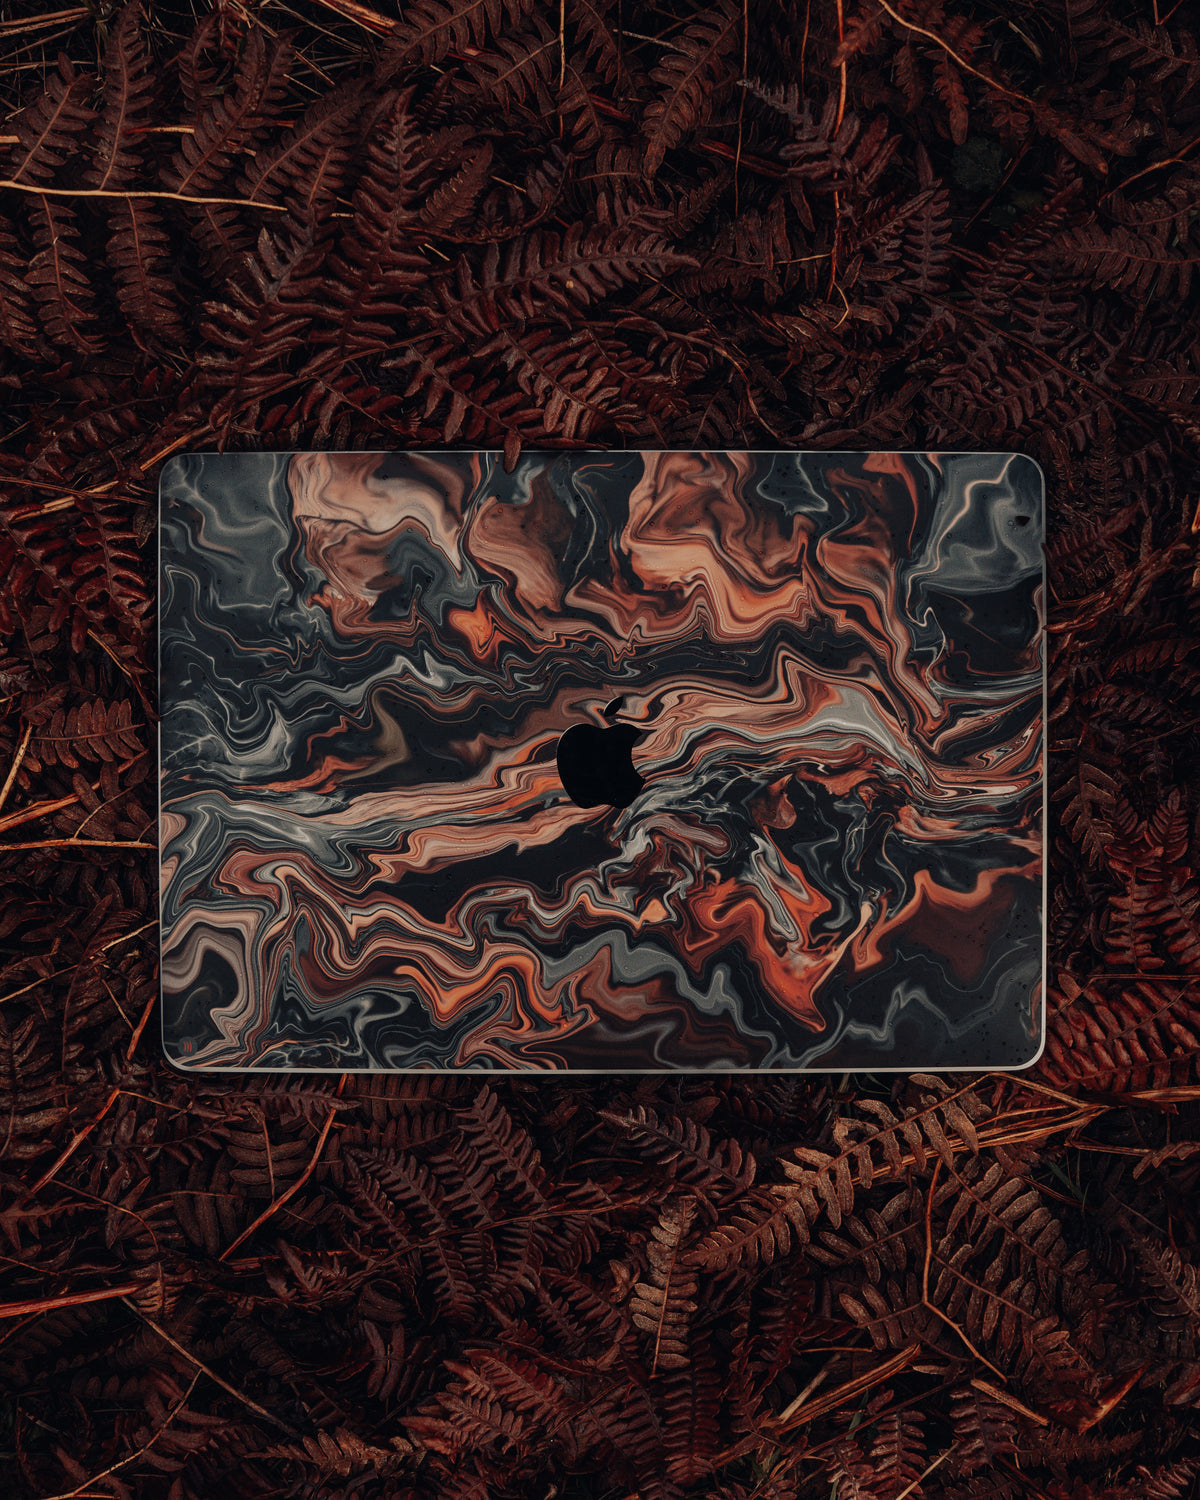 Obsidian (MacBook Skin)